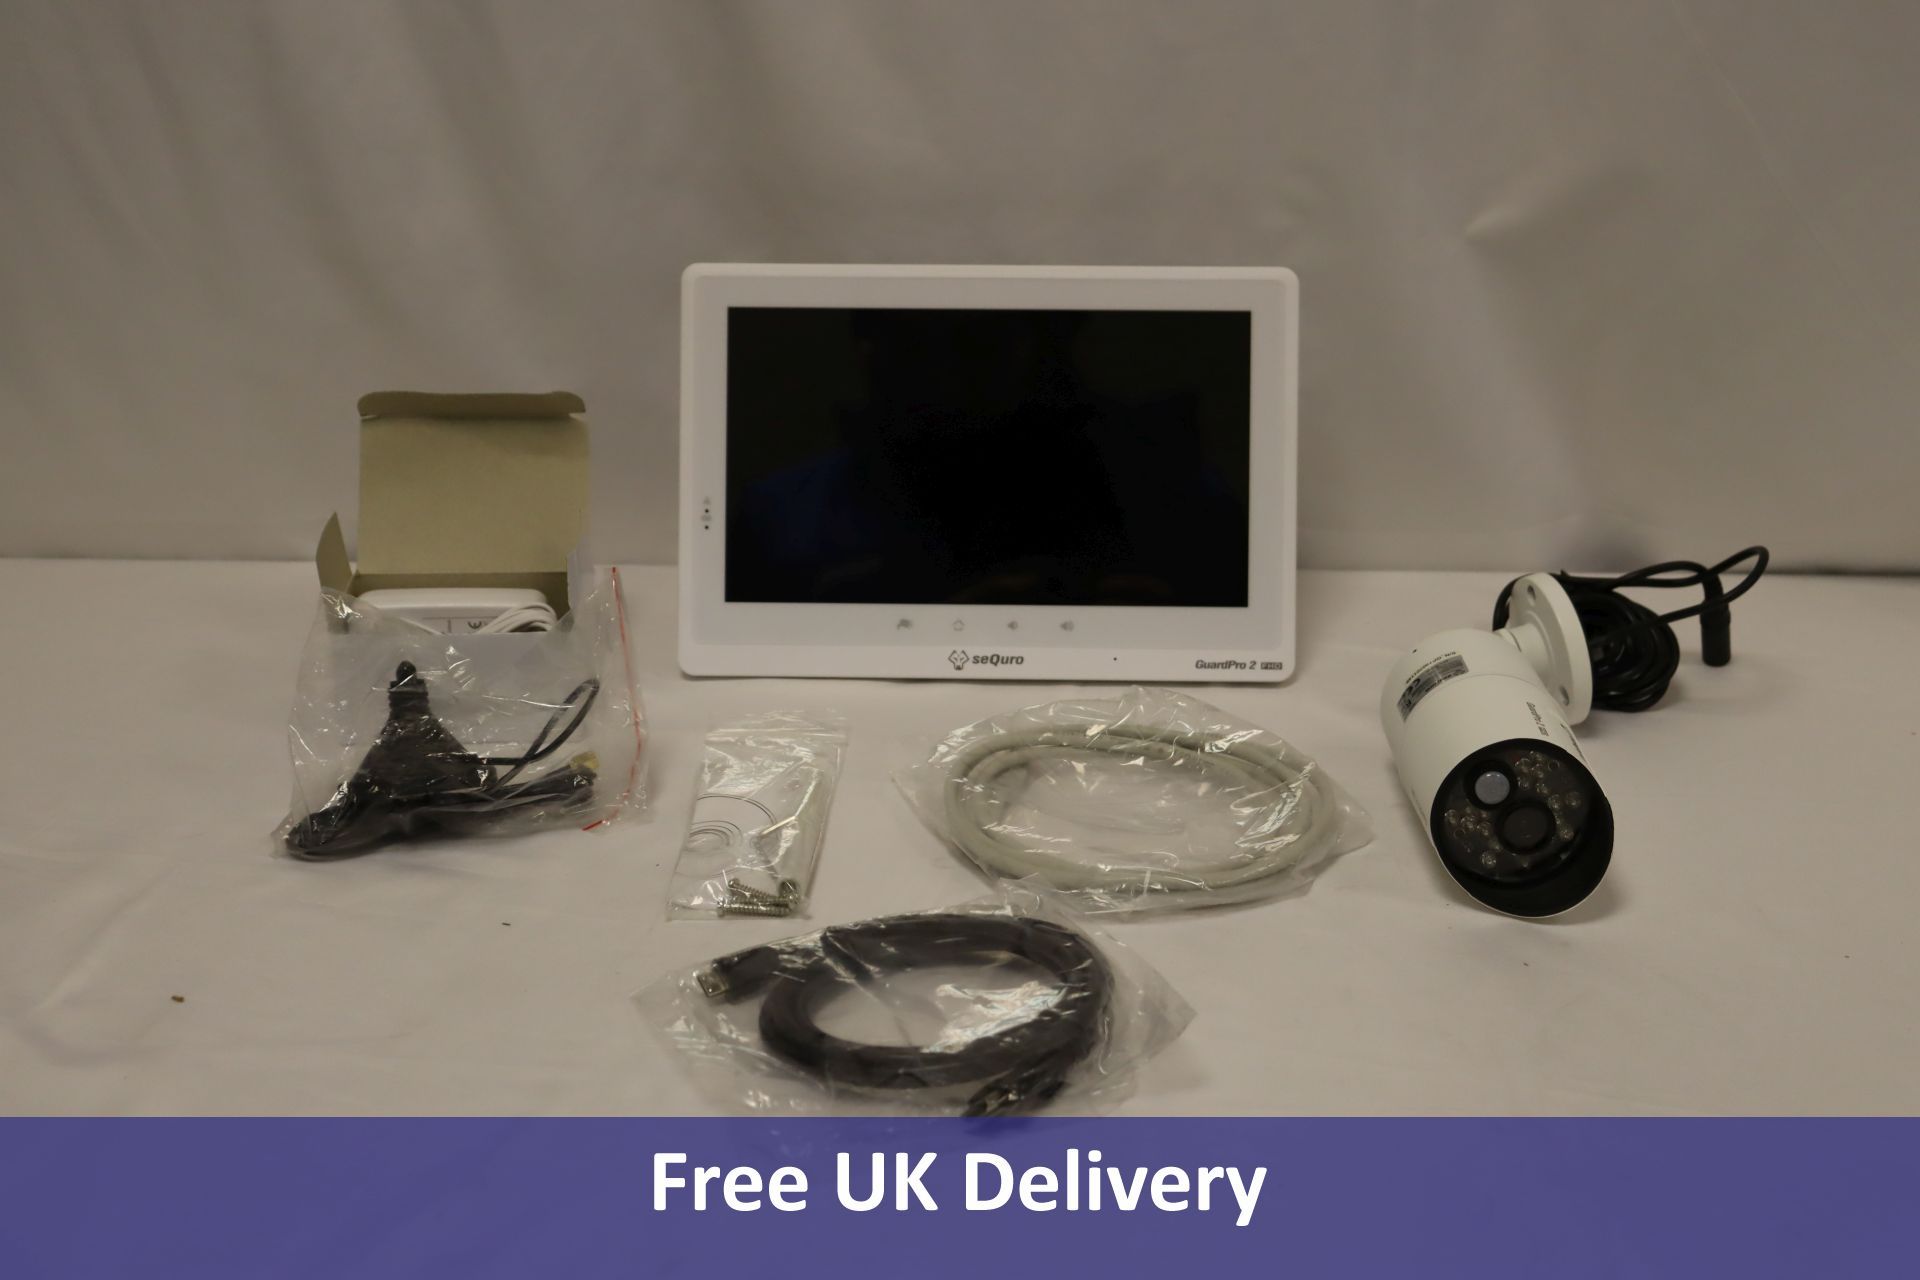 Sequro GuardPro2 Home Surveillance DVR Kit. Ex-demonstration item